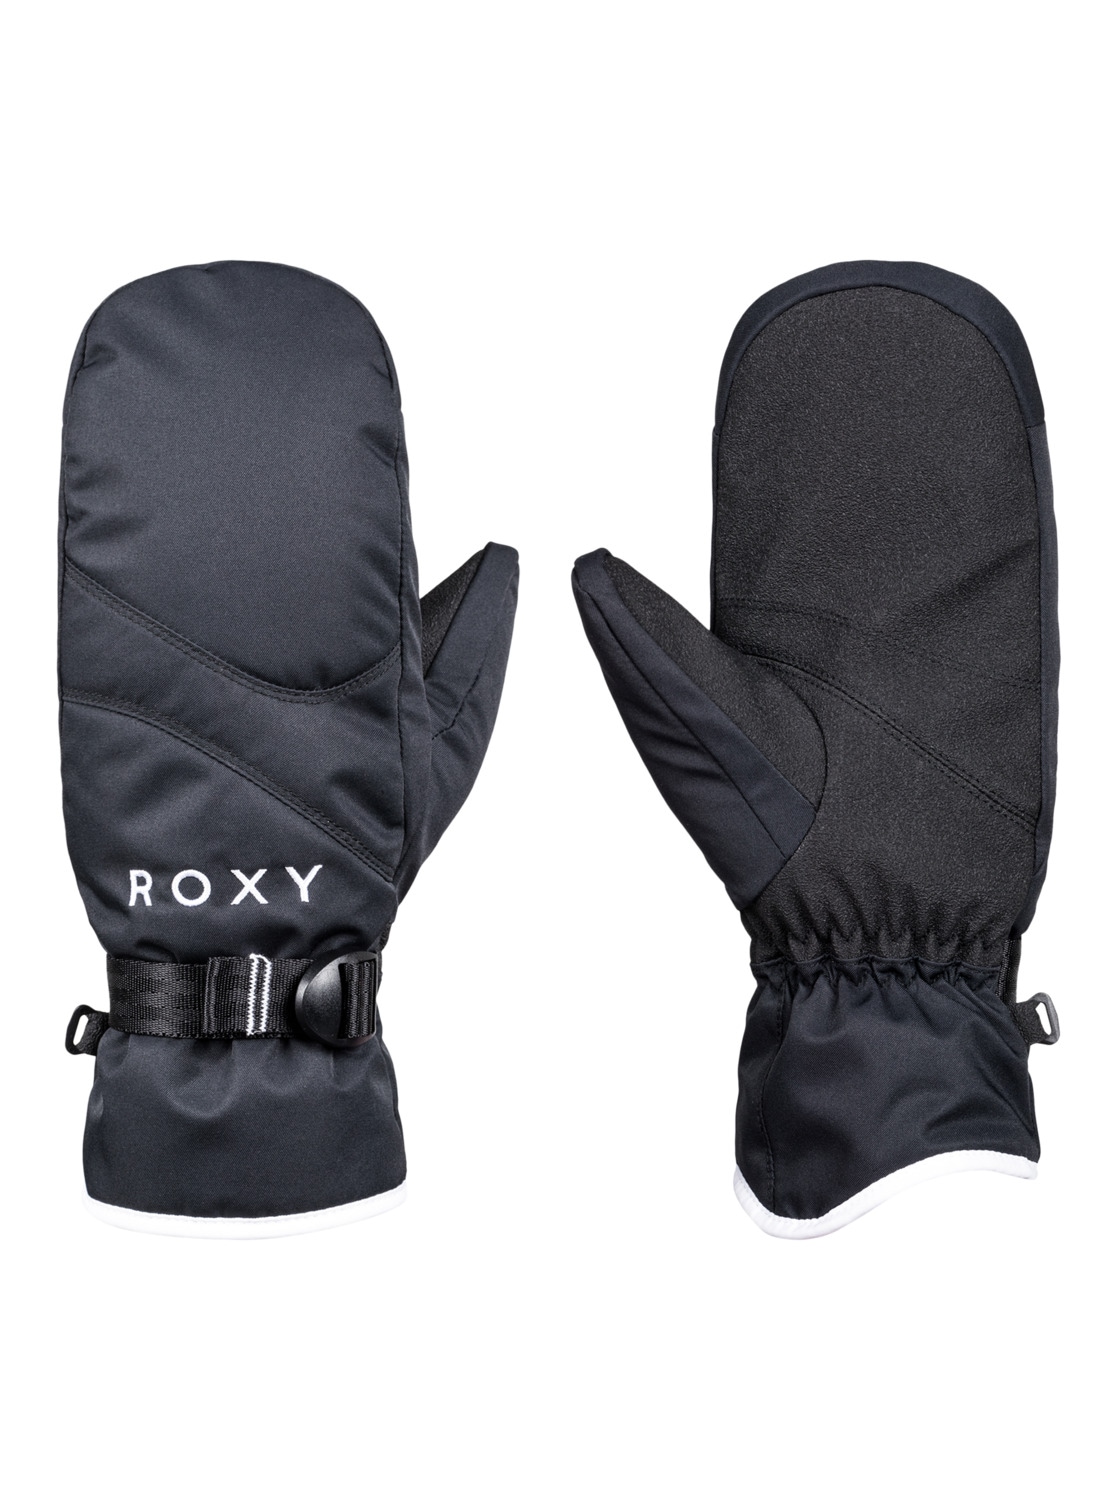 Roxy Snowboardhandschuhe »ROXY Jetty«